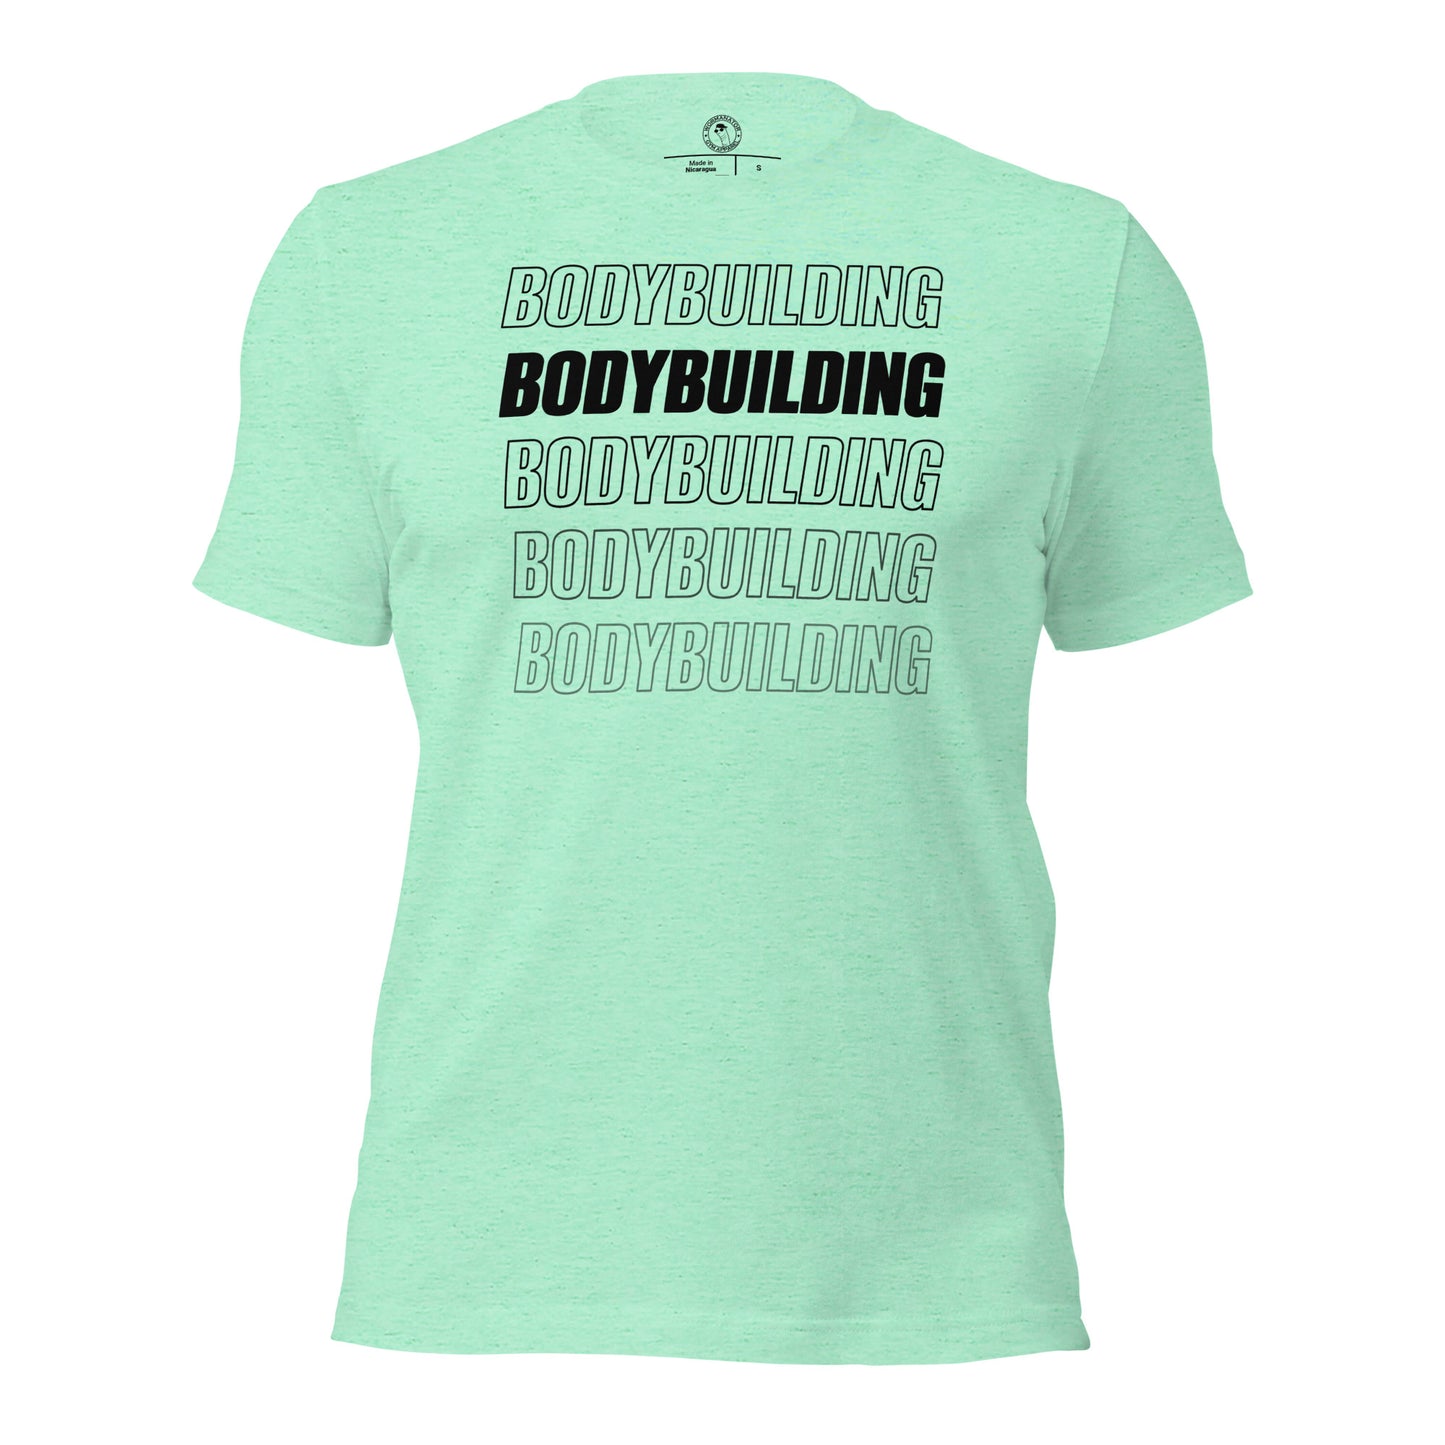 Bodybuilding Shirt in Heather Mint